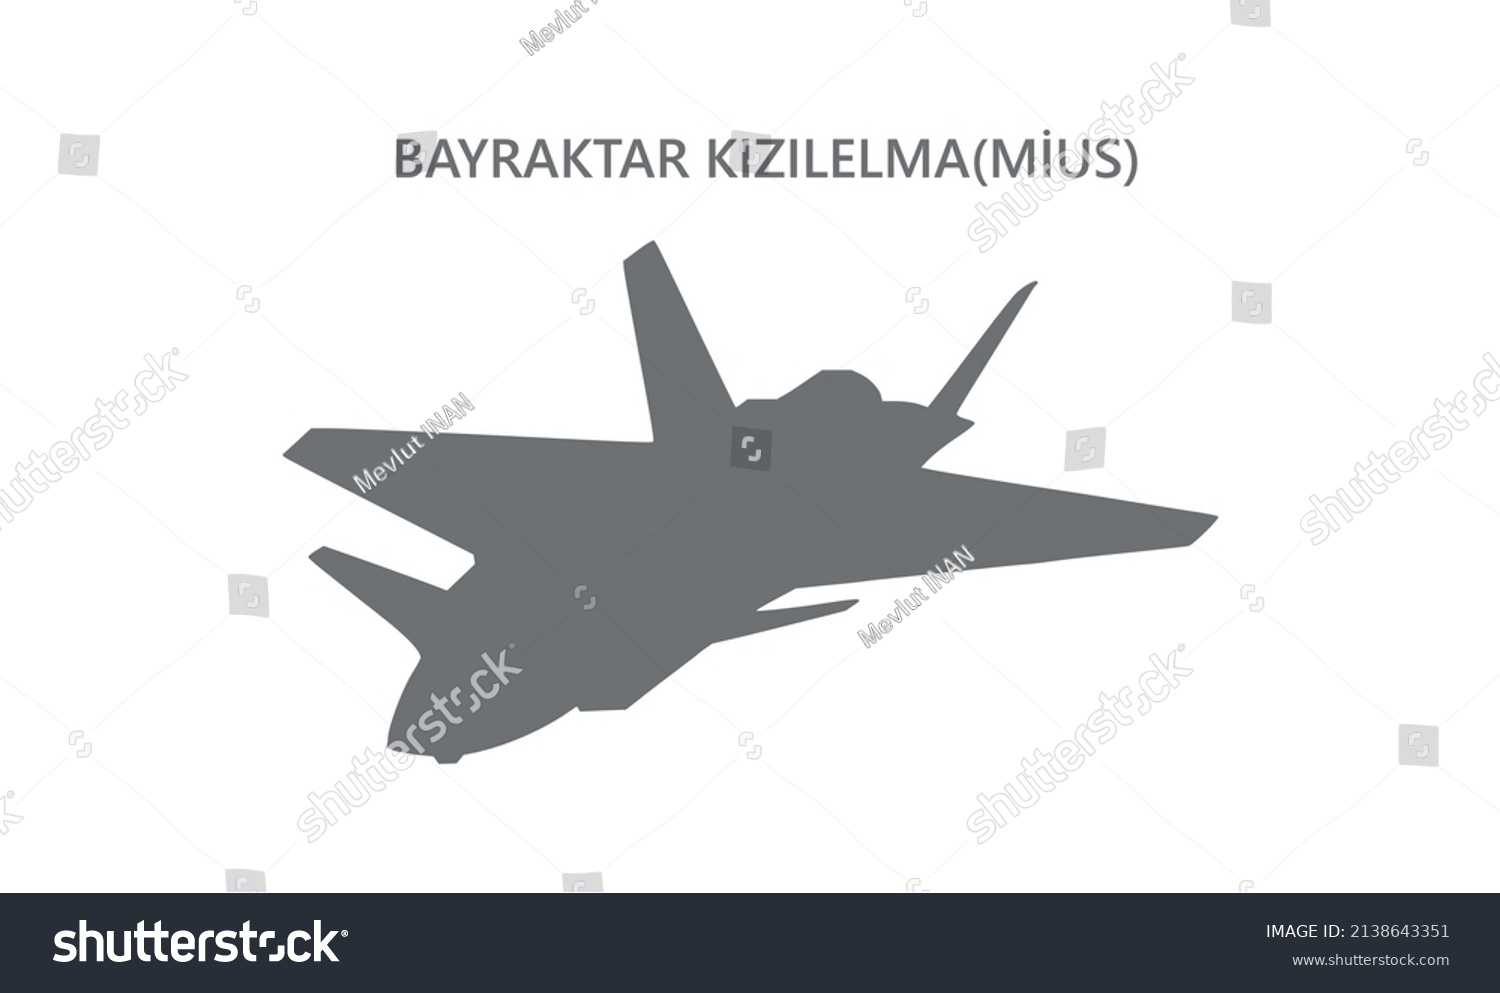 SVG of Bayraktar Kızılelma Combatant Unmanned Aircraft System (CUAS).  svg